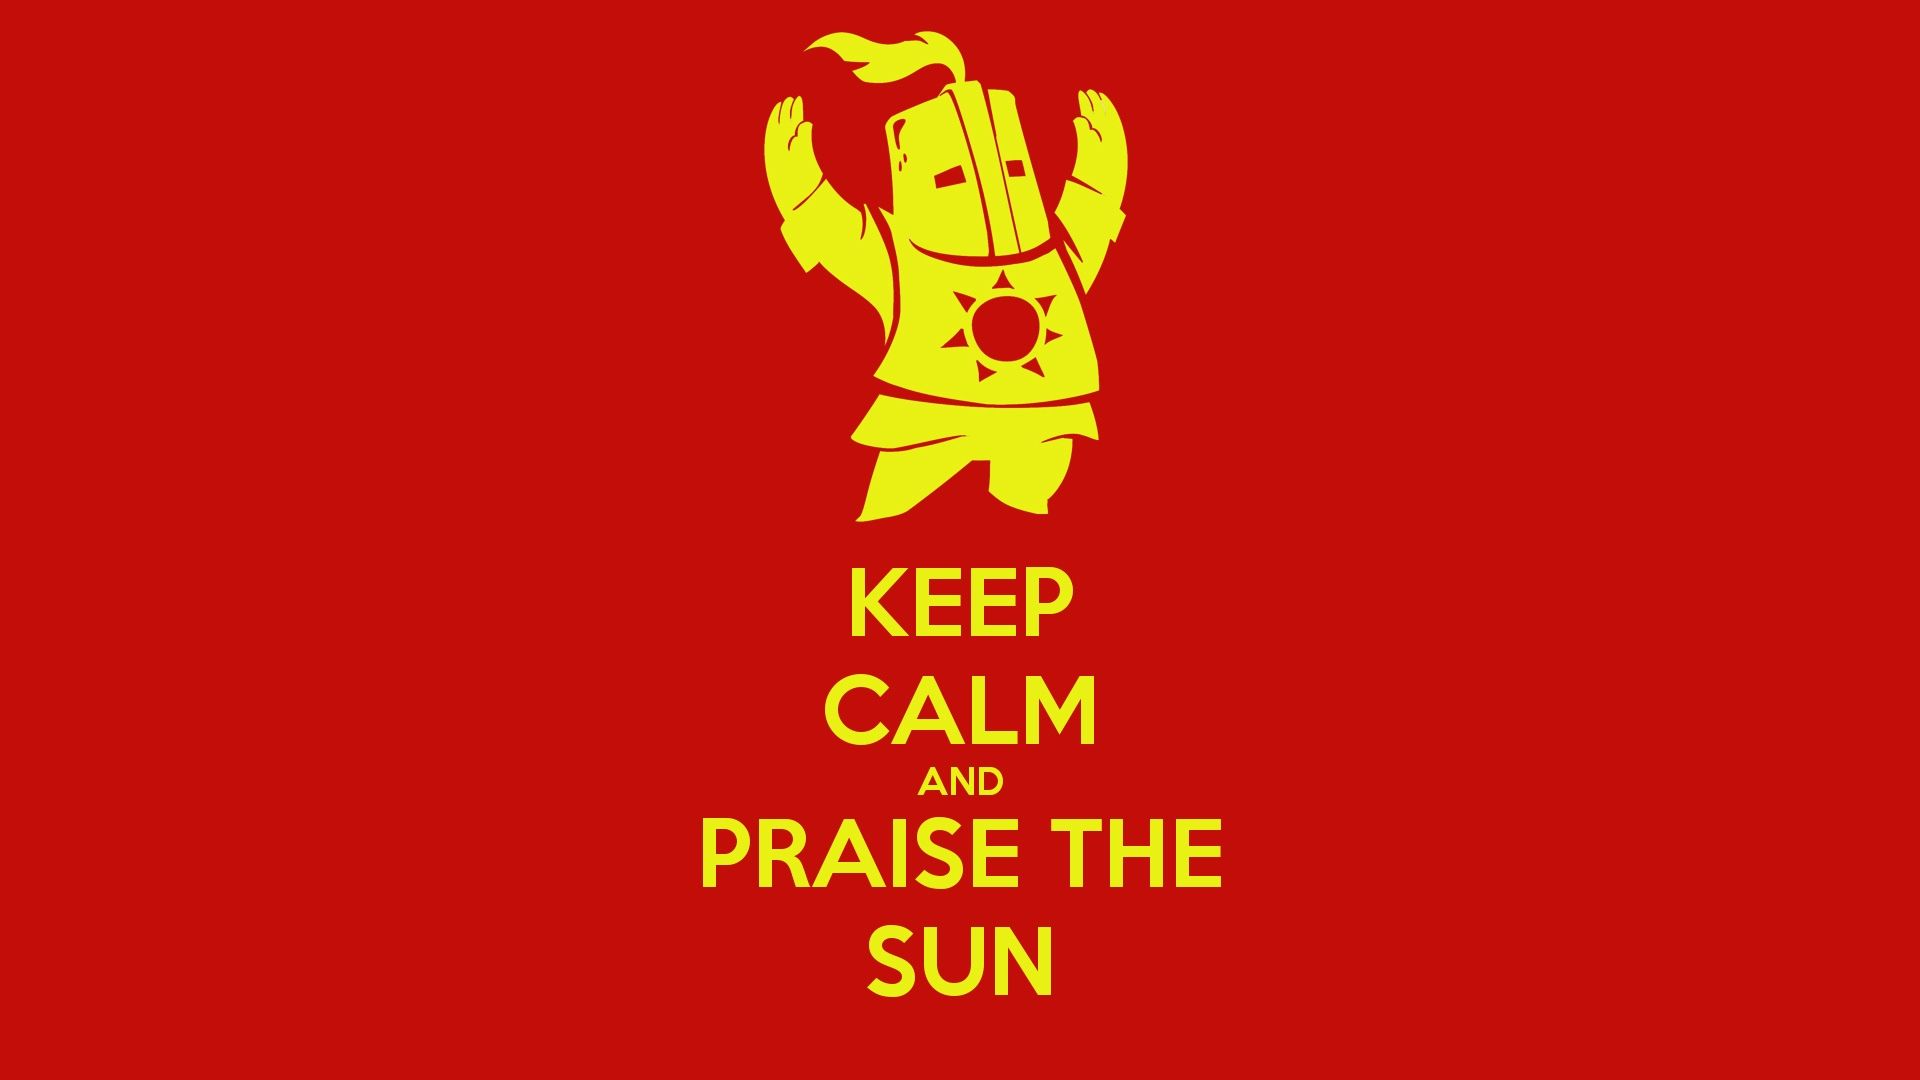 Praise the sun wallpaper